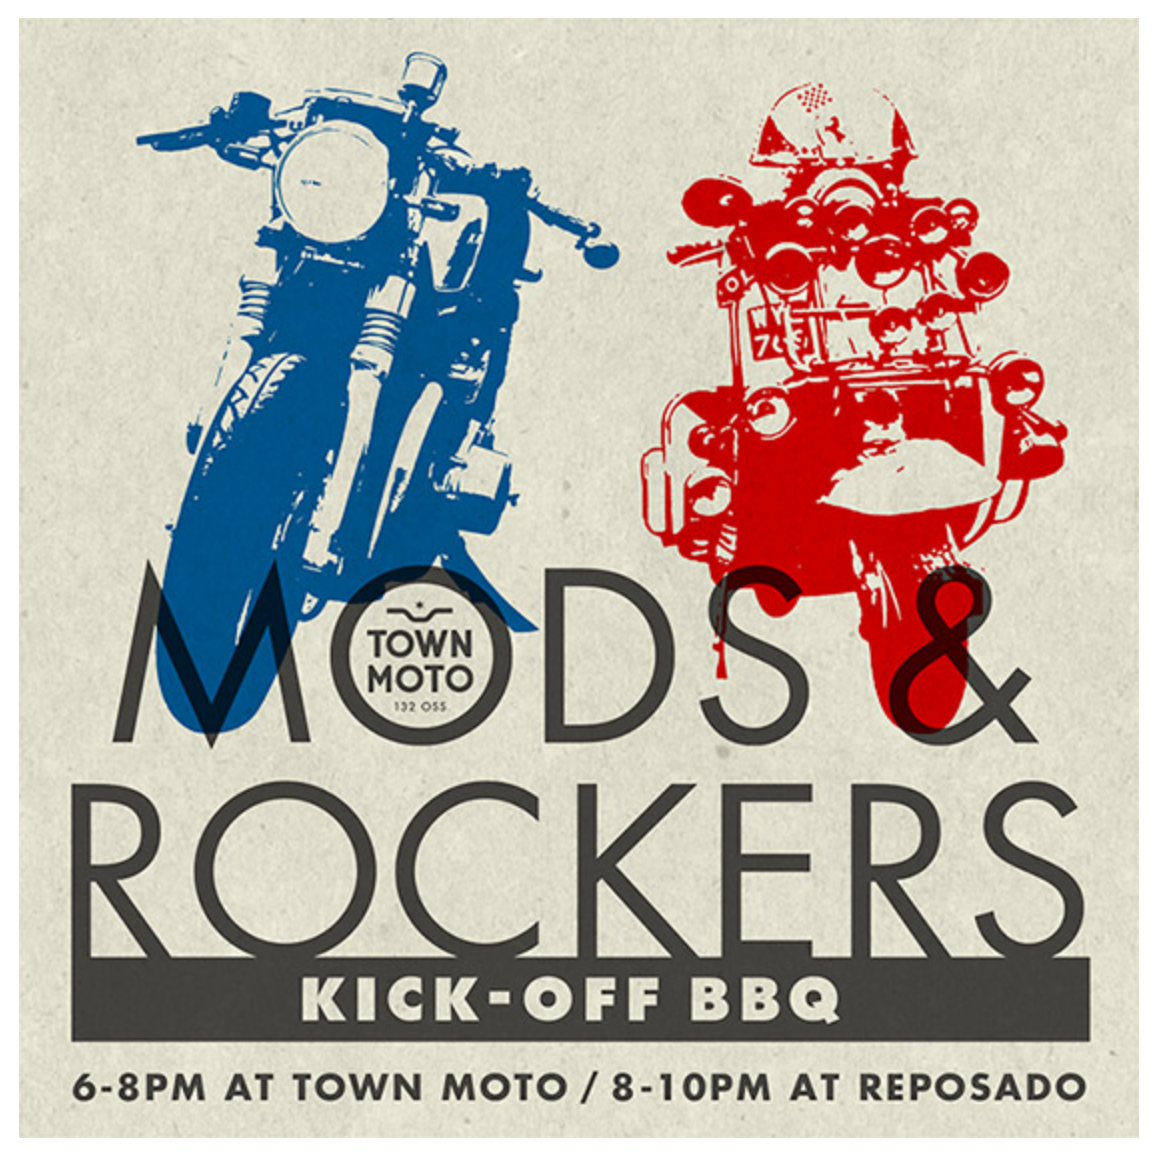 Mods n Rockers Toronto BBQ Kick-off, Toronto Aug 14, 2015